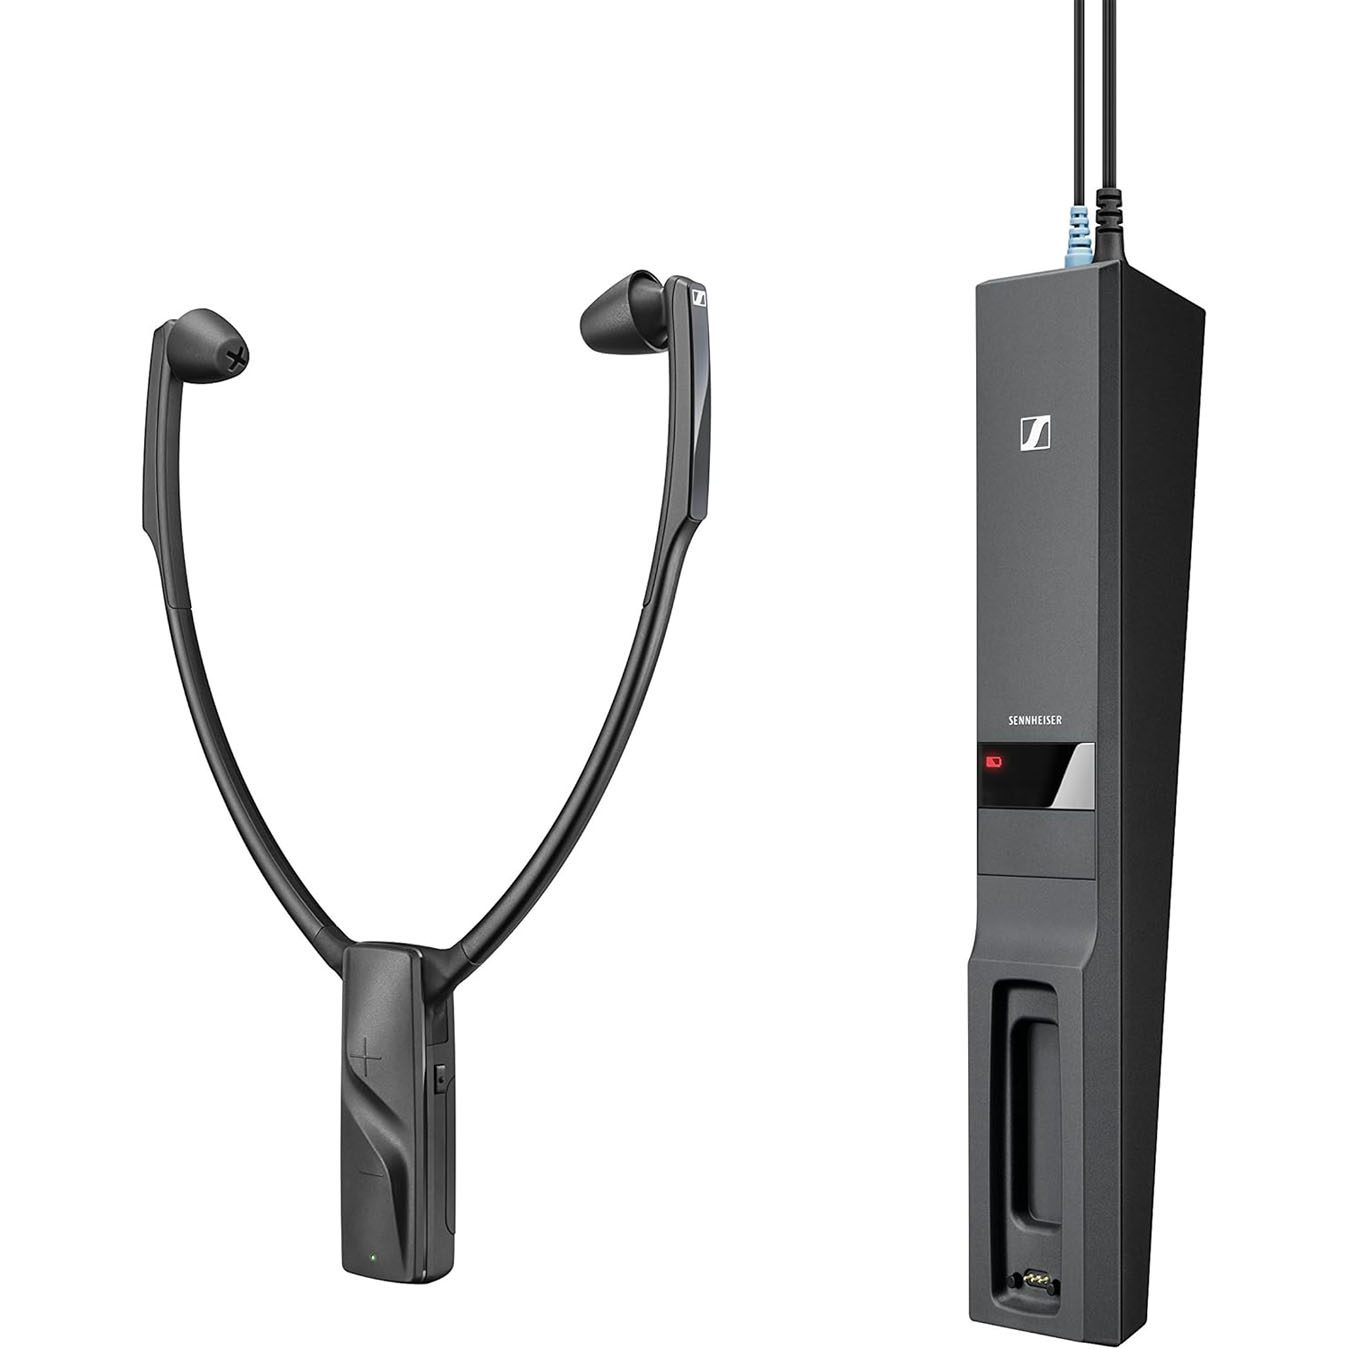  Sennheiser RS 2000 Digital Wireless TV Headphones